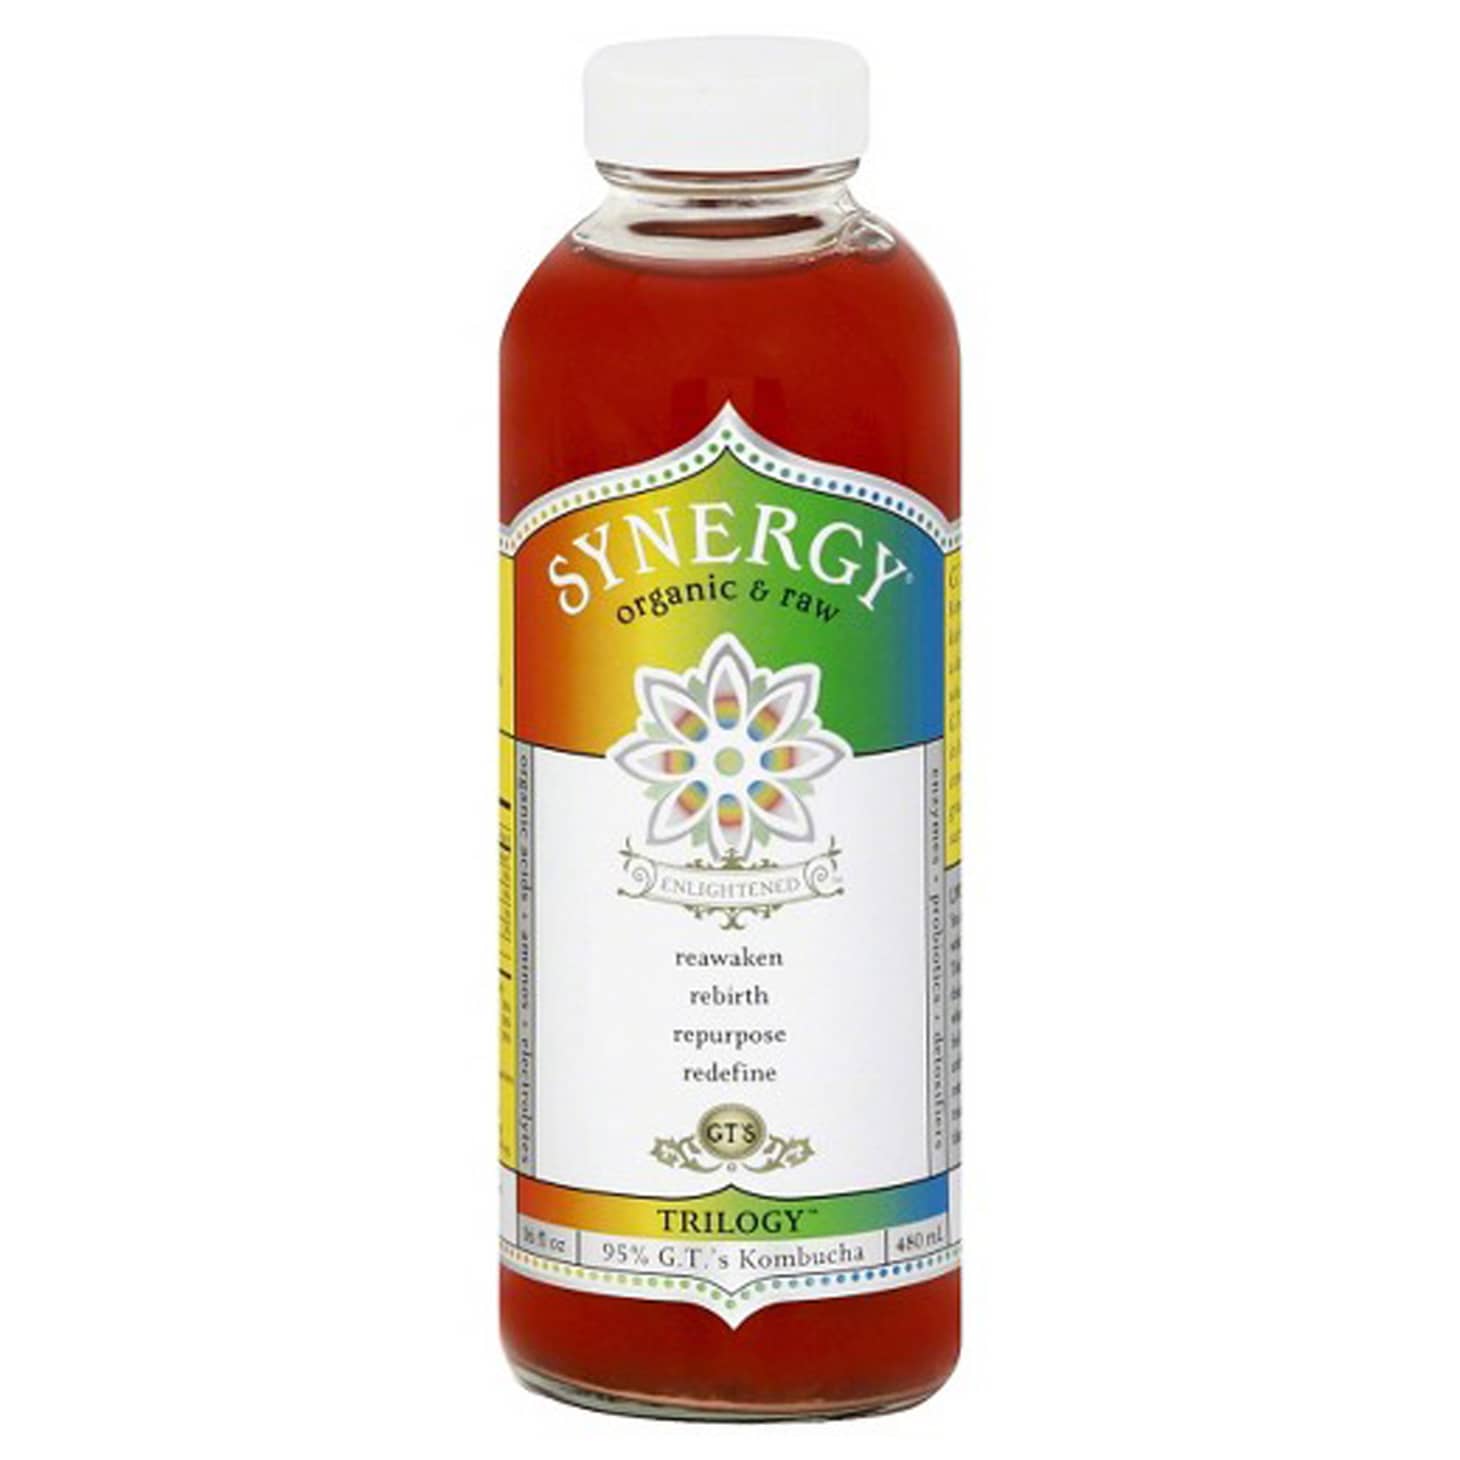 synergy kombucha flavors